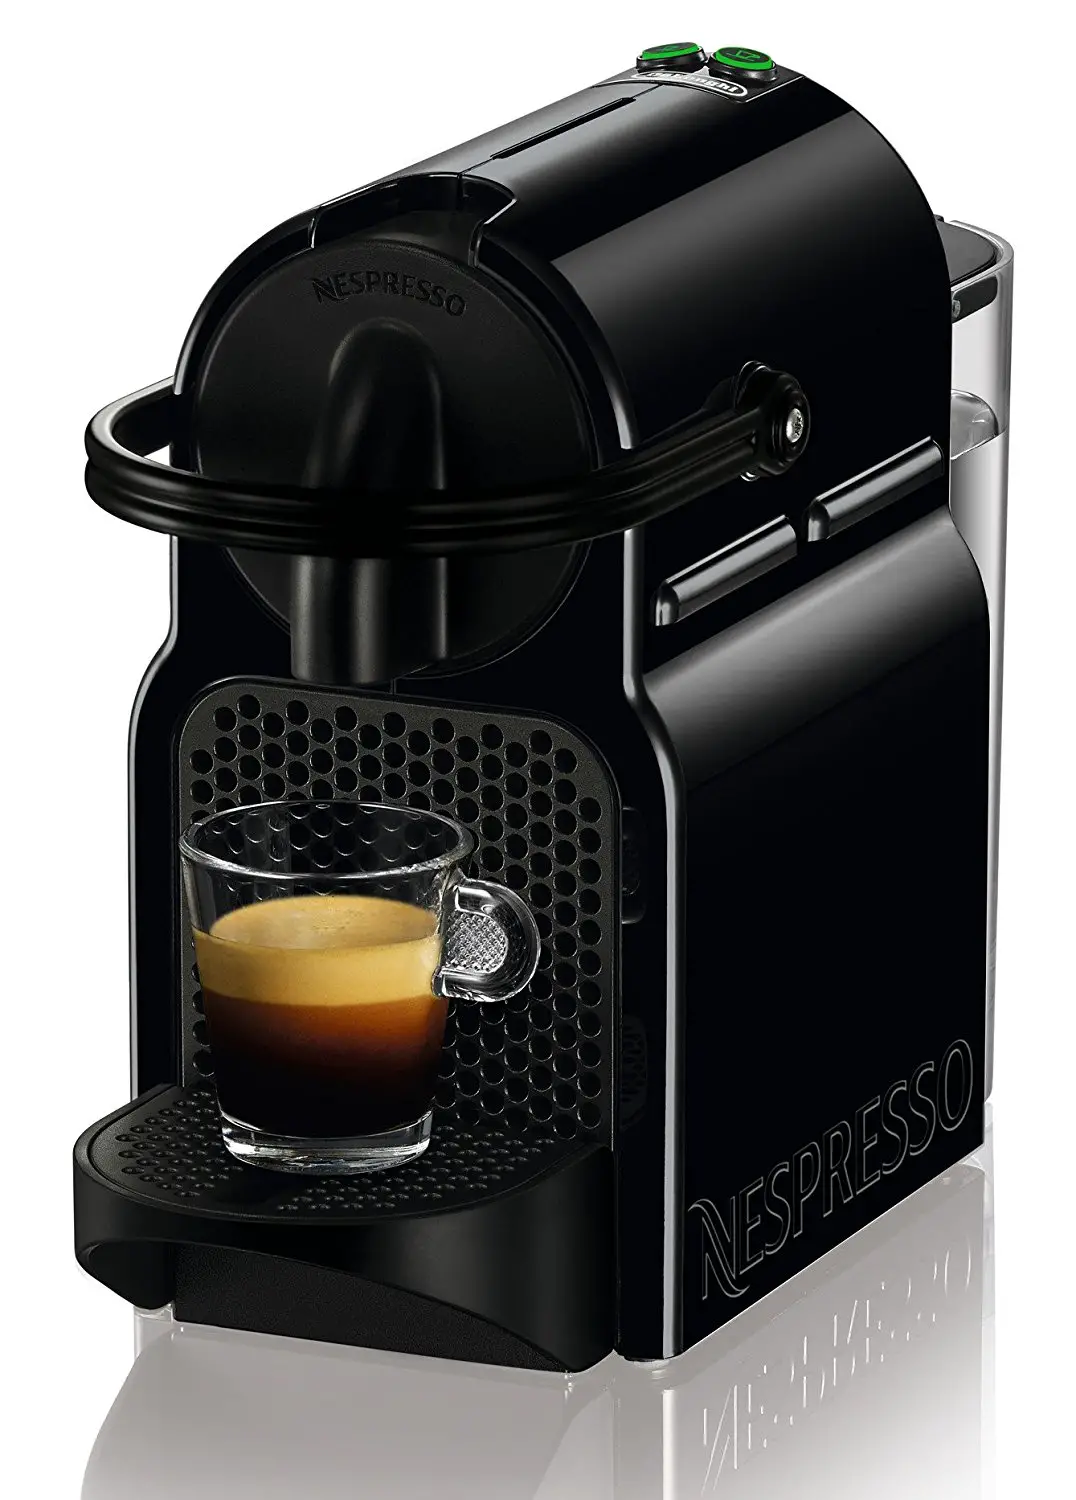 5 Best Nespresso Coffee Machine for Latte and Espresso